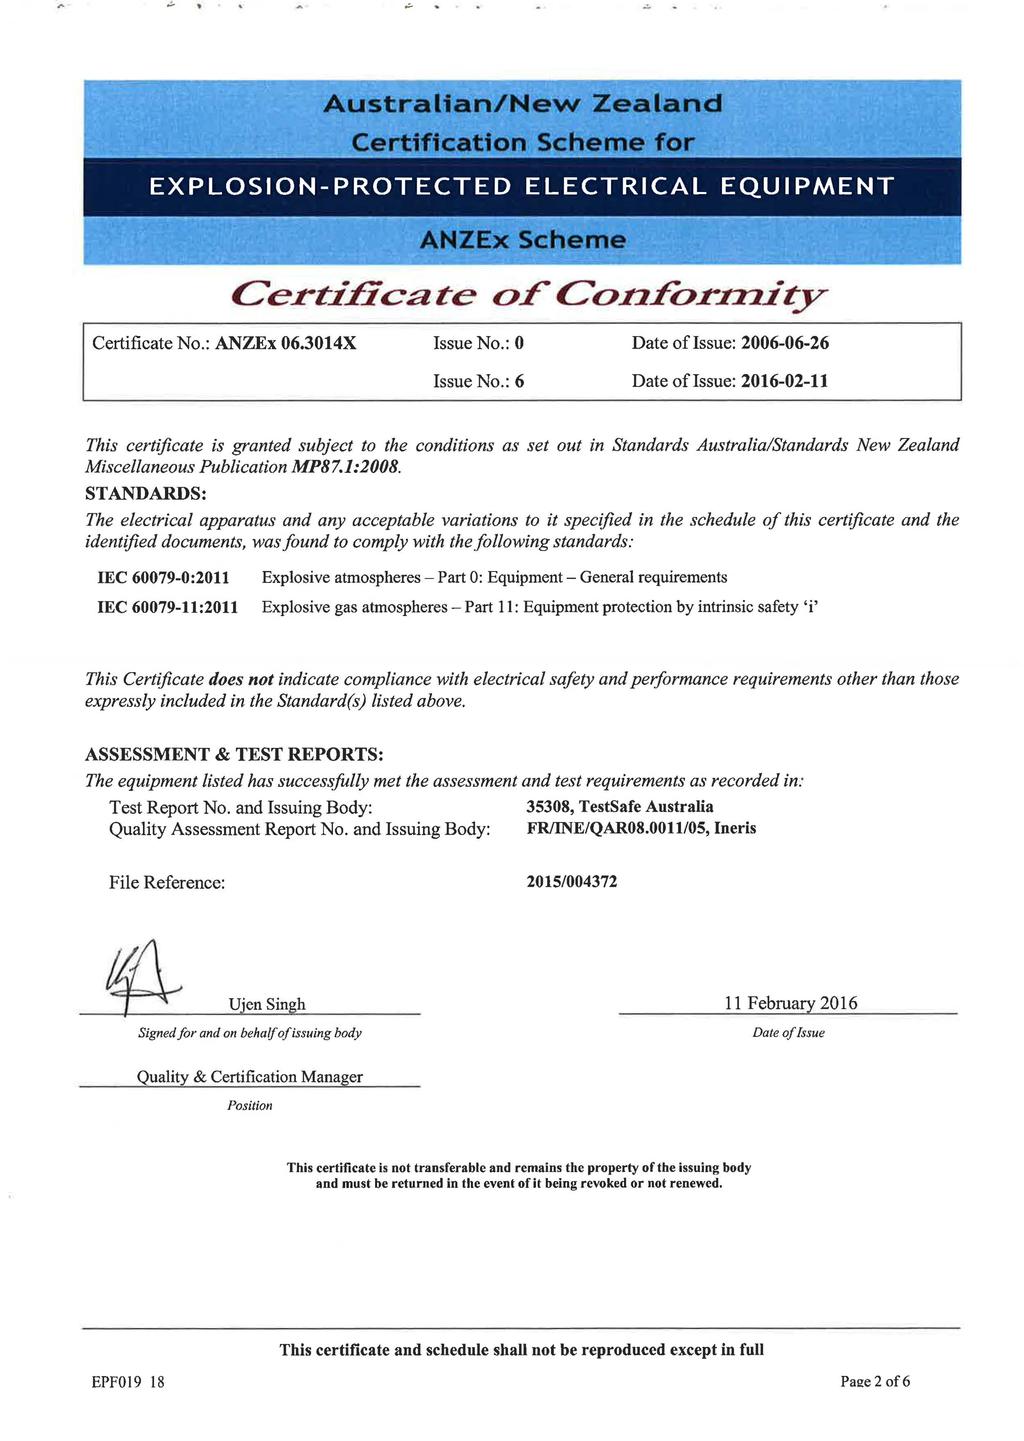 Australian/New Zealand Certfftcatton Scheme for Cert-.ificace of Conform.icy Certificate ANZEx 06.